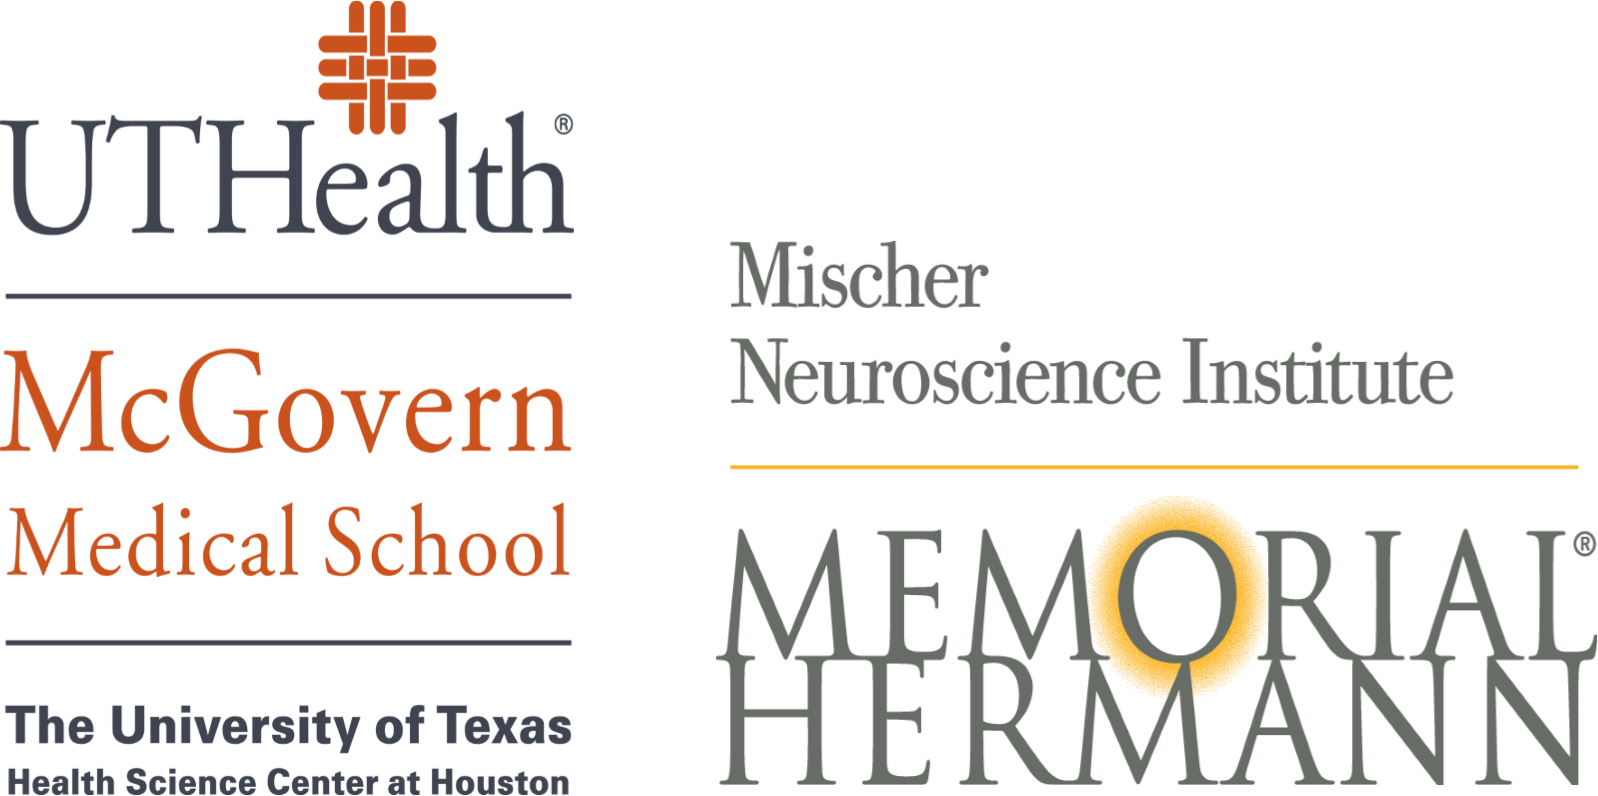 Mischer Neuroscience Institute logo and McGovern Medical School partnership logo with Memorial Hermann